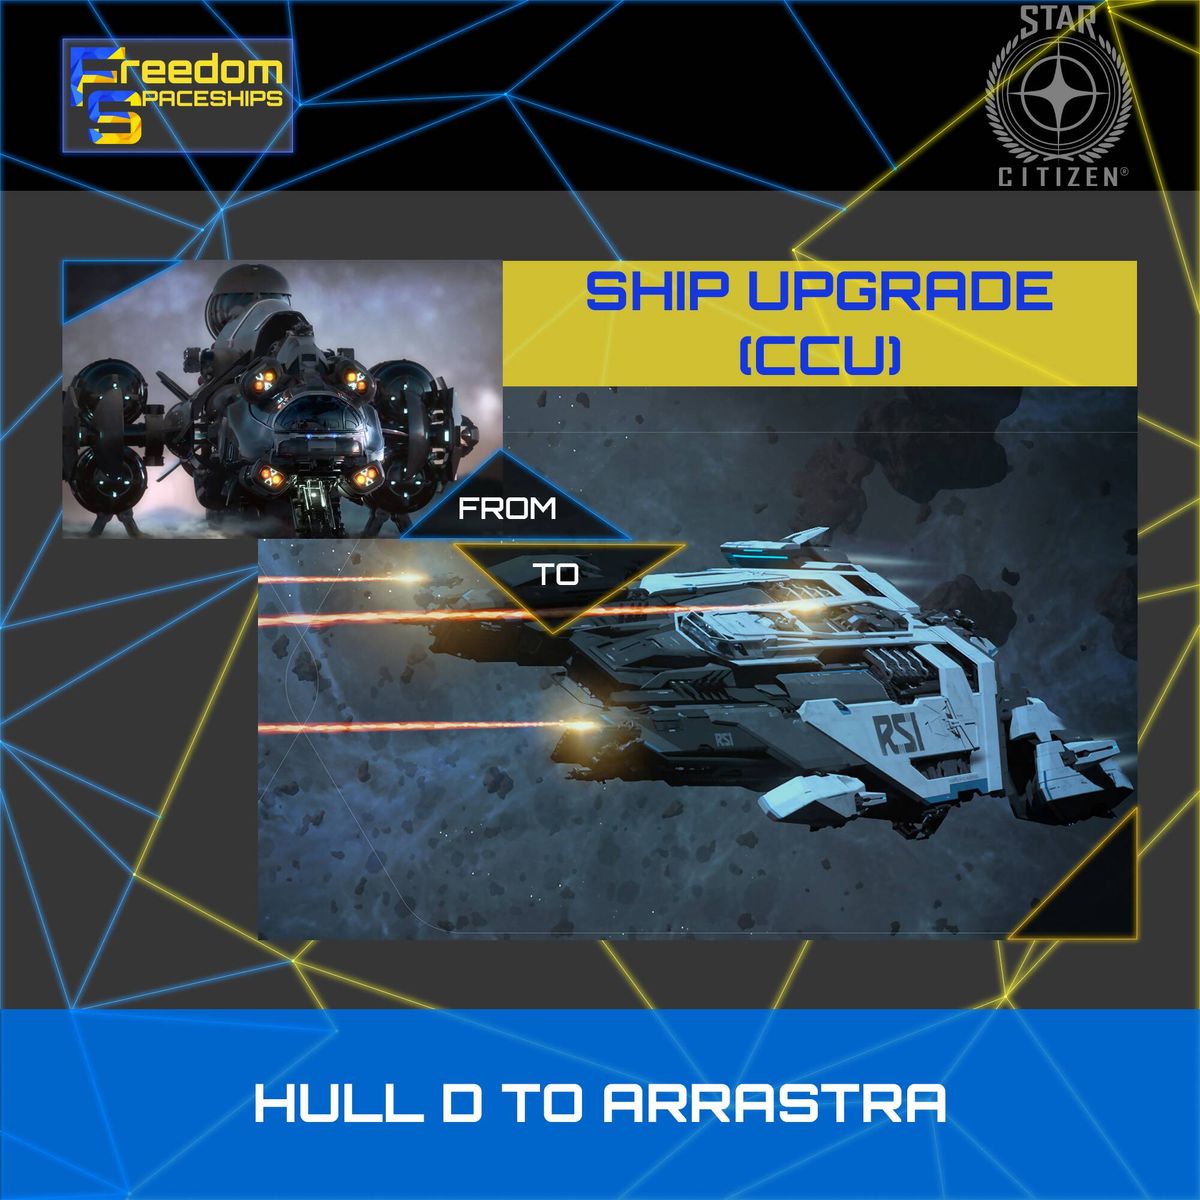 Upgrade - Hull D to Arrastra